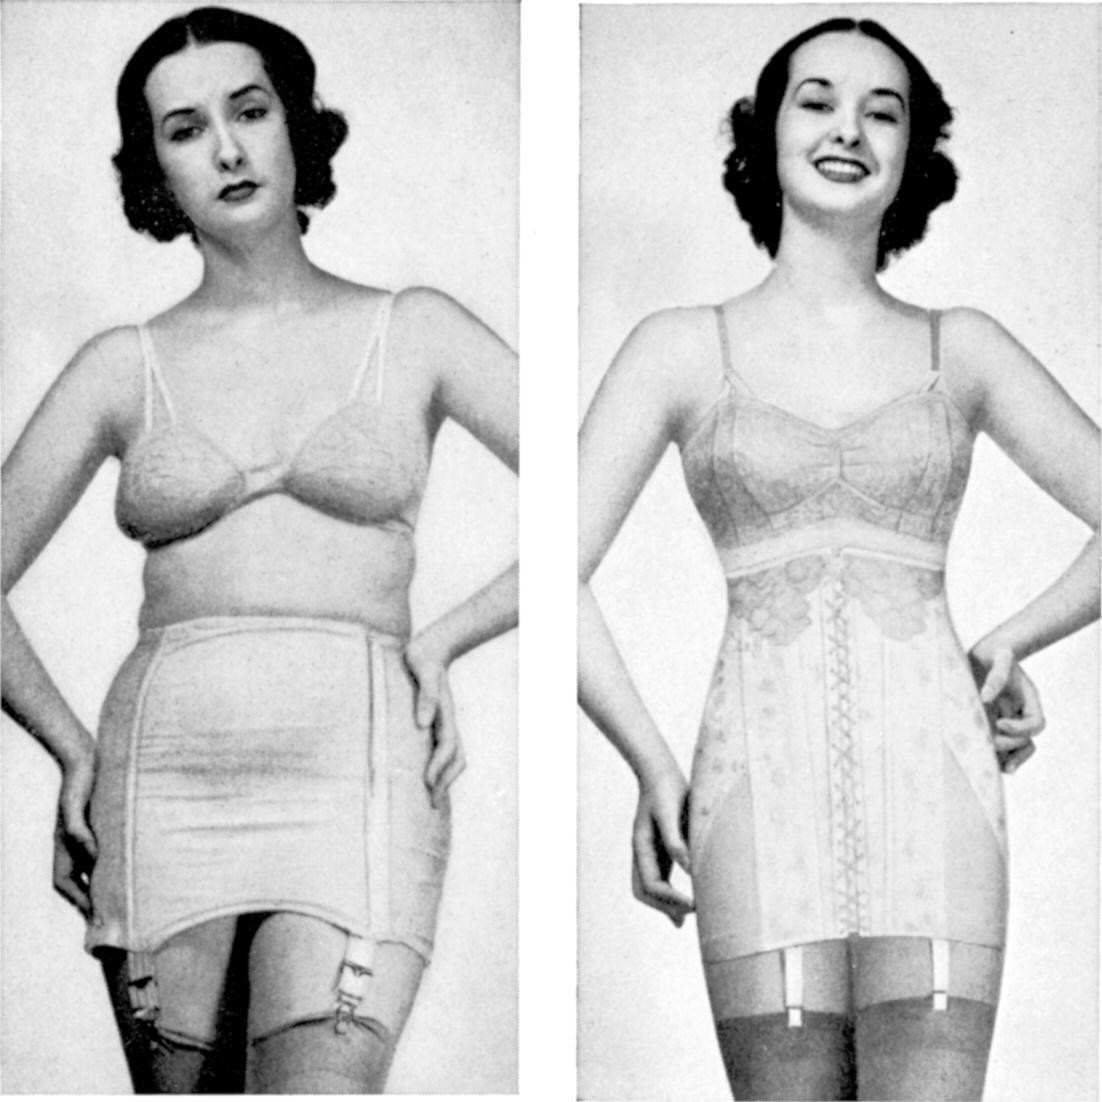 Spencer_corset_1941_before_after.jpg